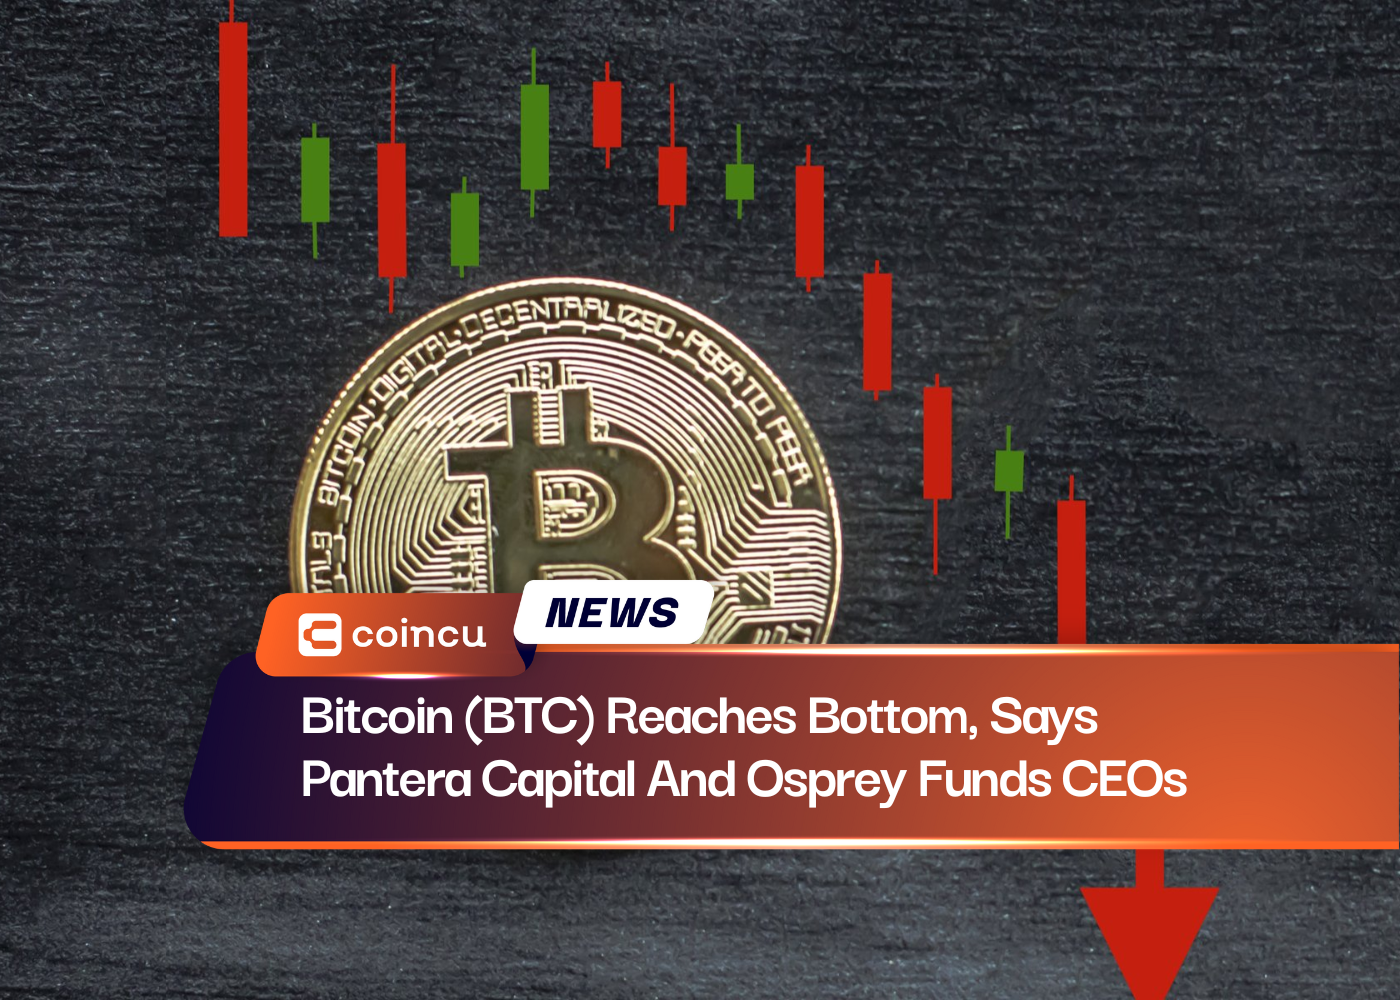 Bitcoin (BTC) Reaches Bottom, Says Pantera Capital And Osprey Funds CEOs